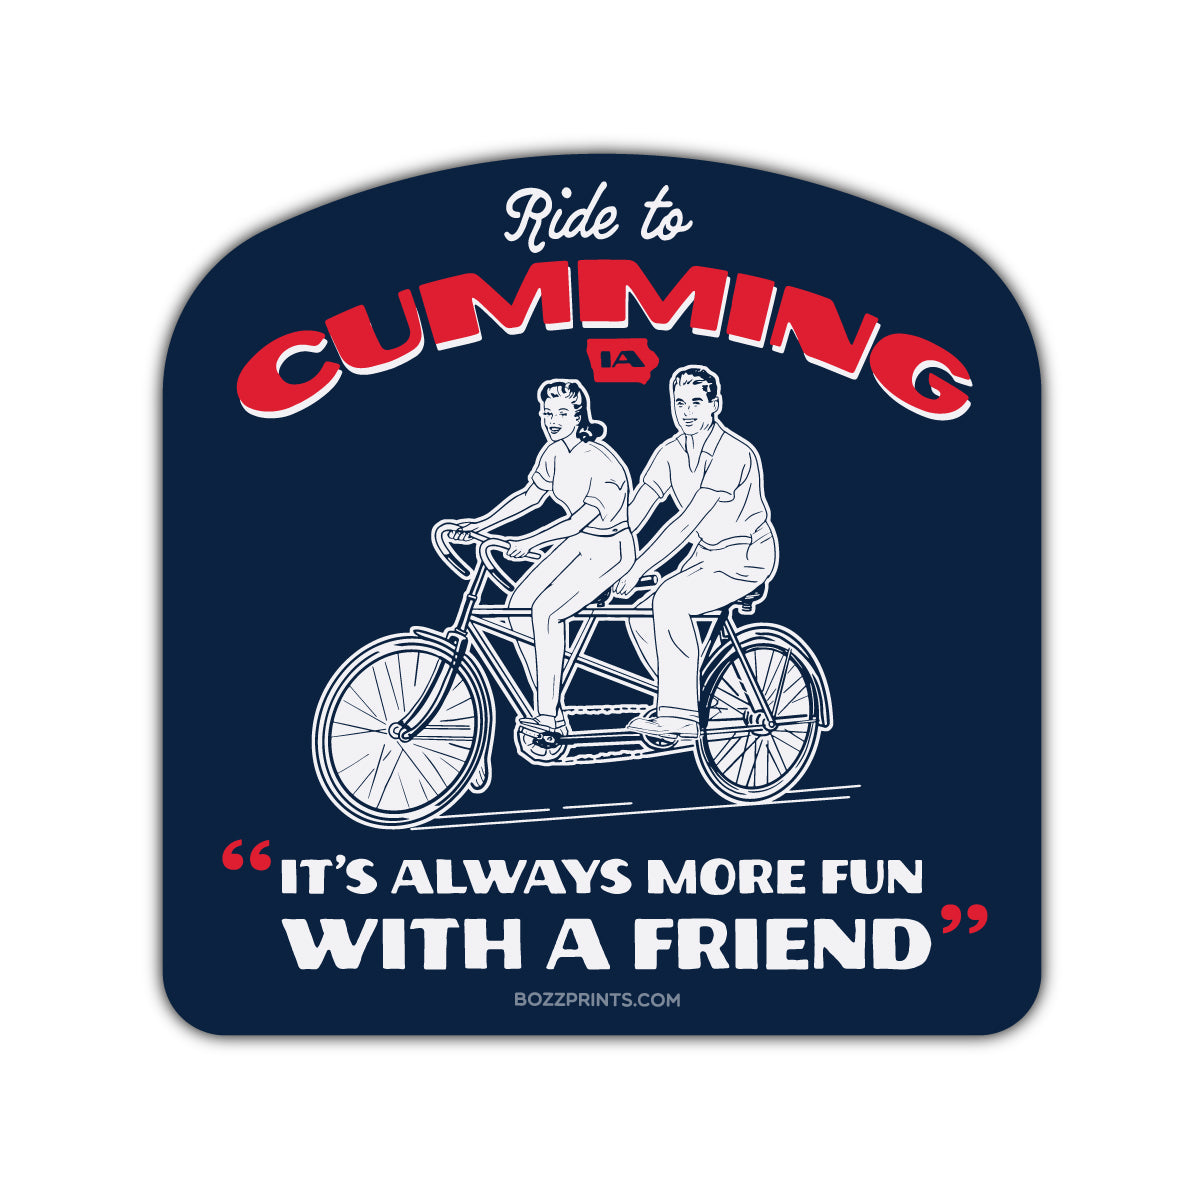 Ride to Cumming - Bozz Prints